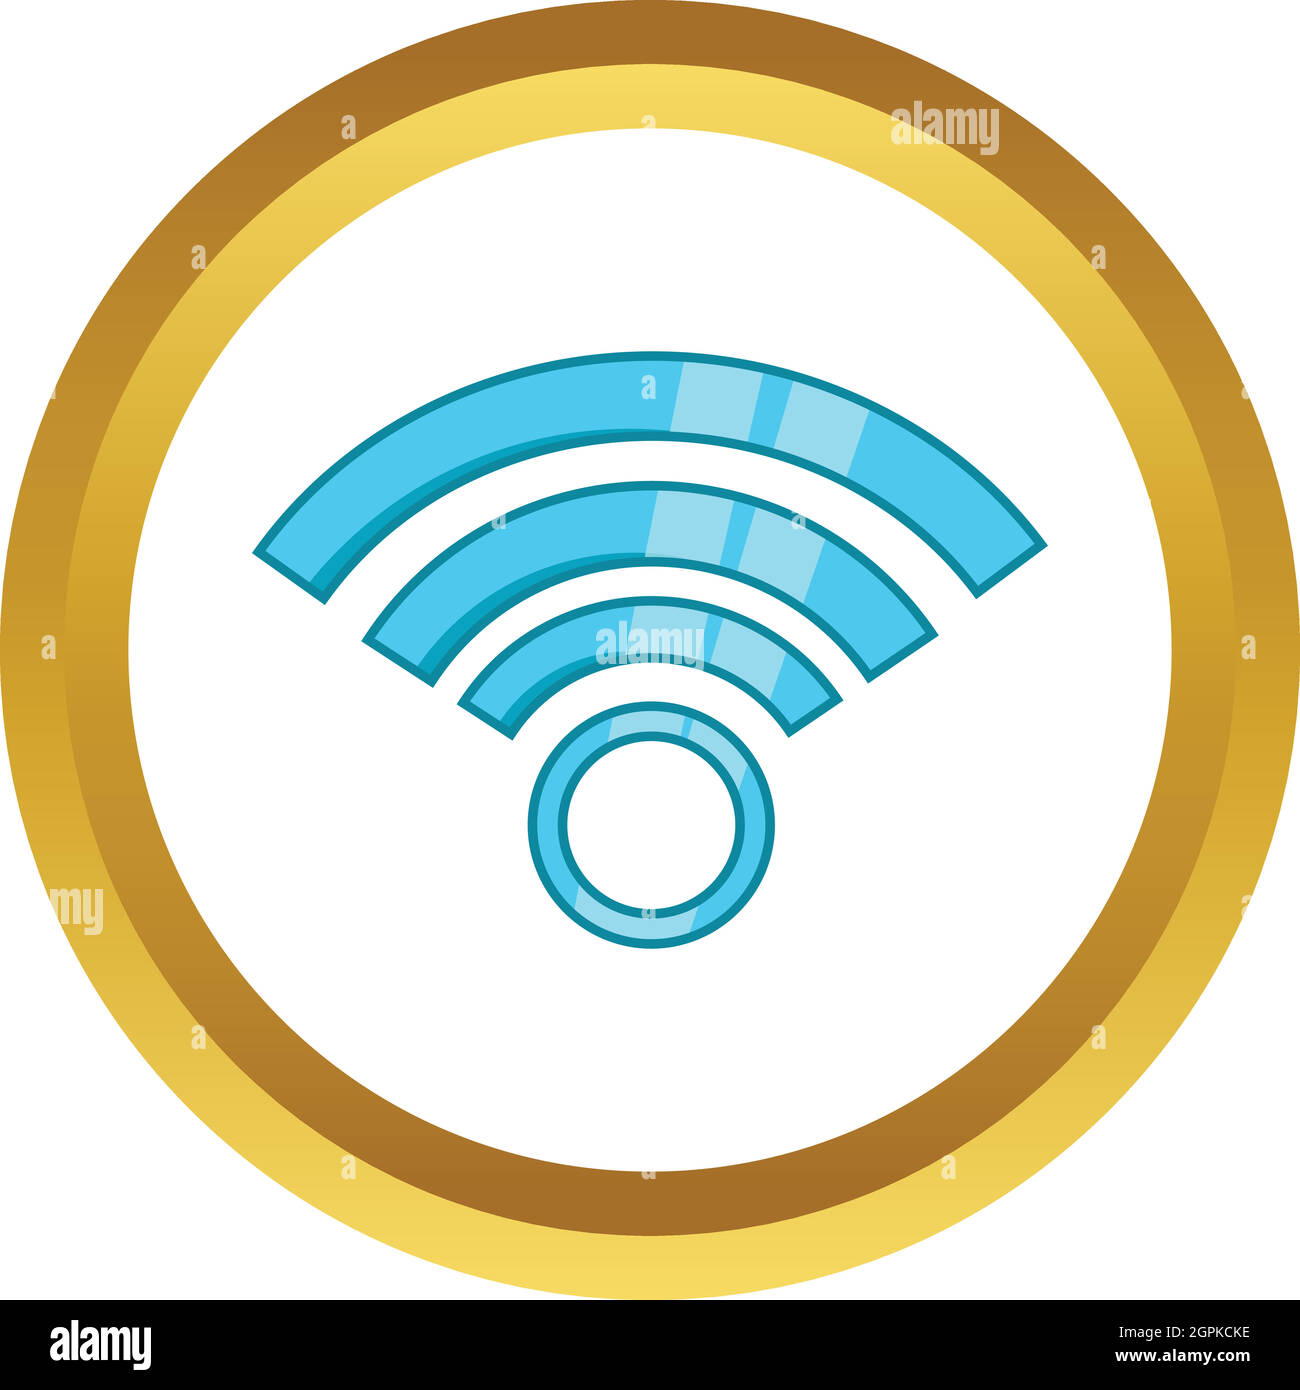 Wireless network symbol vector icon Stock Vector